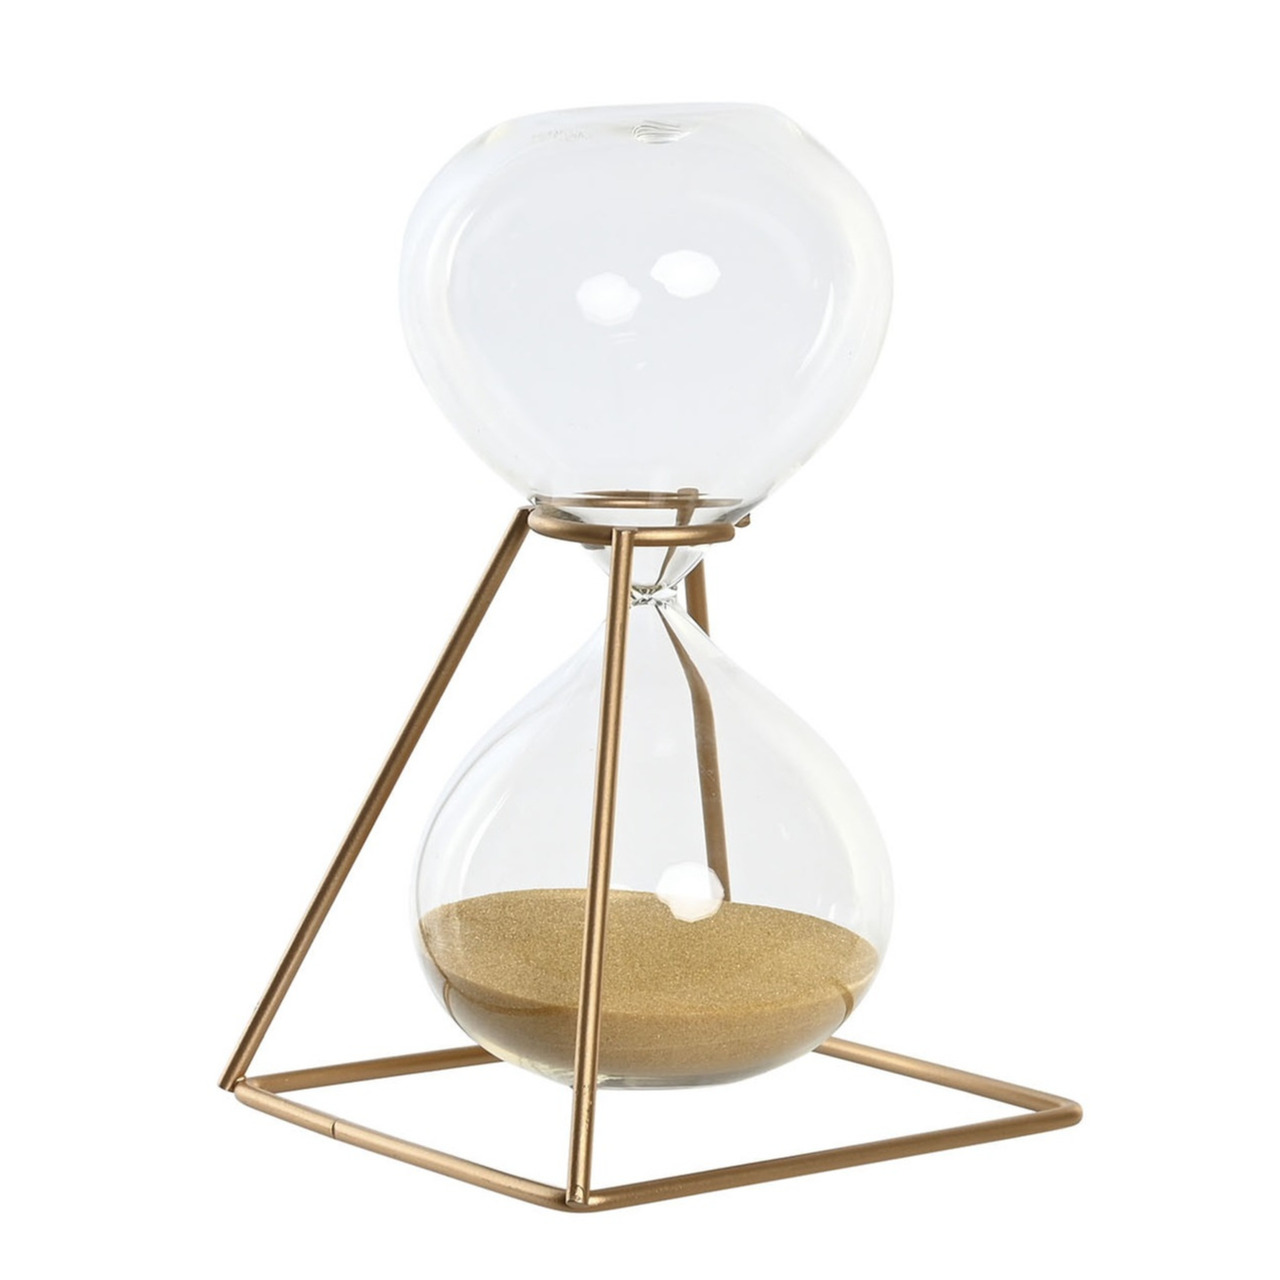 Items Zandloper cilinder - decoratie of tijdsmeting - 30 minuten goud zand - H18 cm - glas -